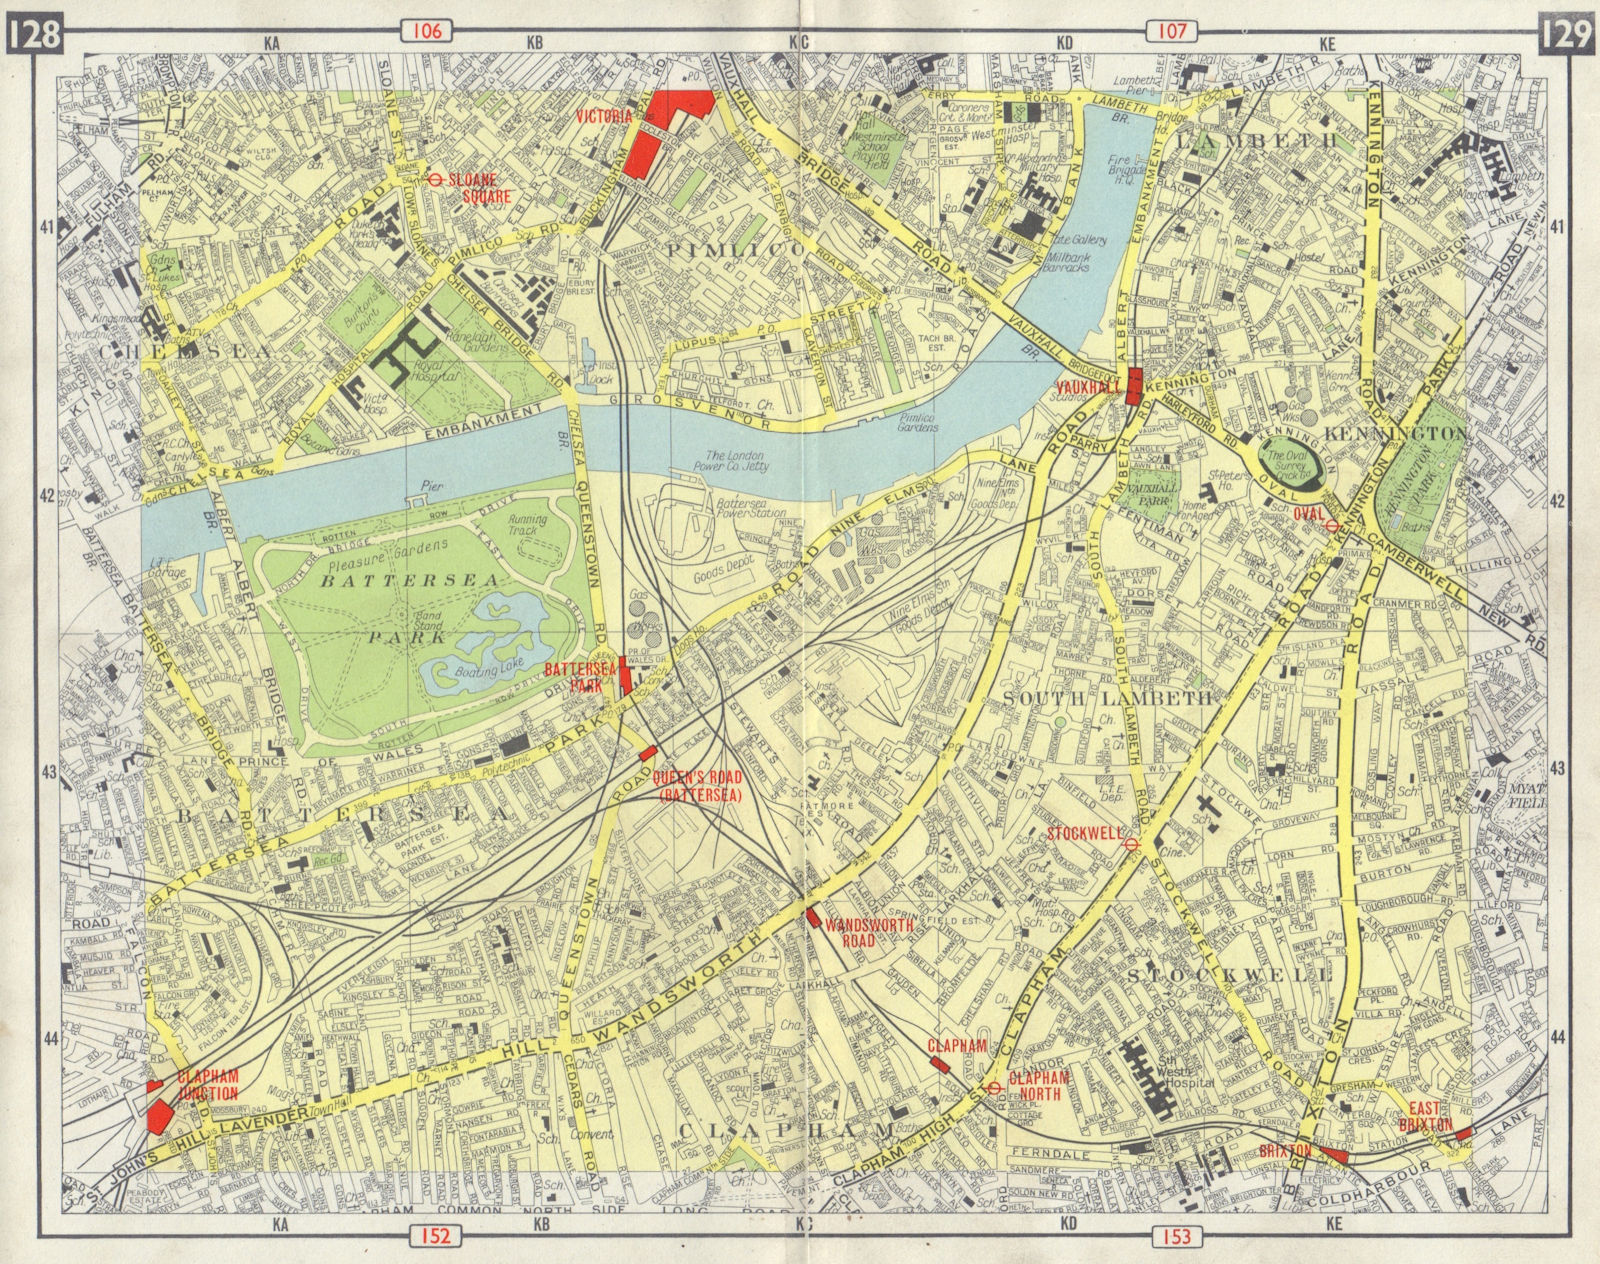 S LONDON Lambeth Pimlico Chelsea Kennington Battersea Clapham Stockwell 1965 map